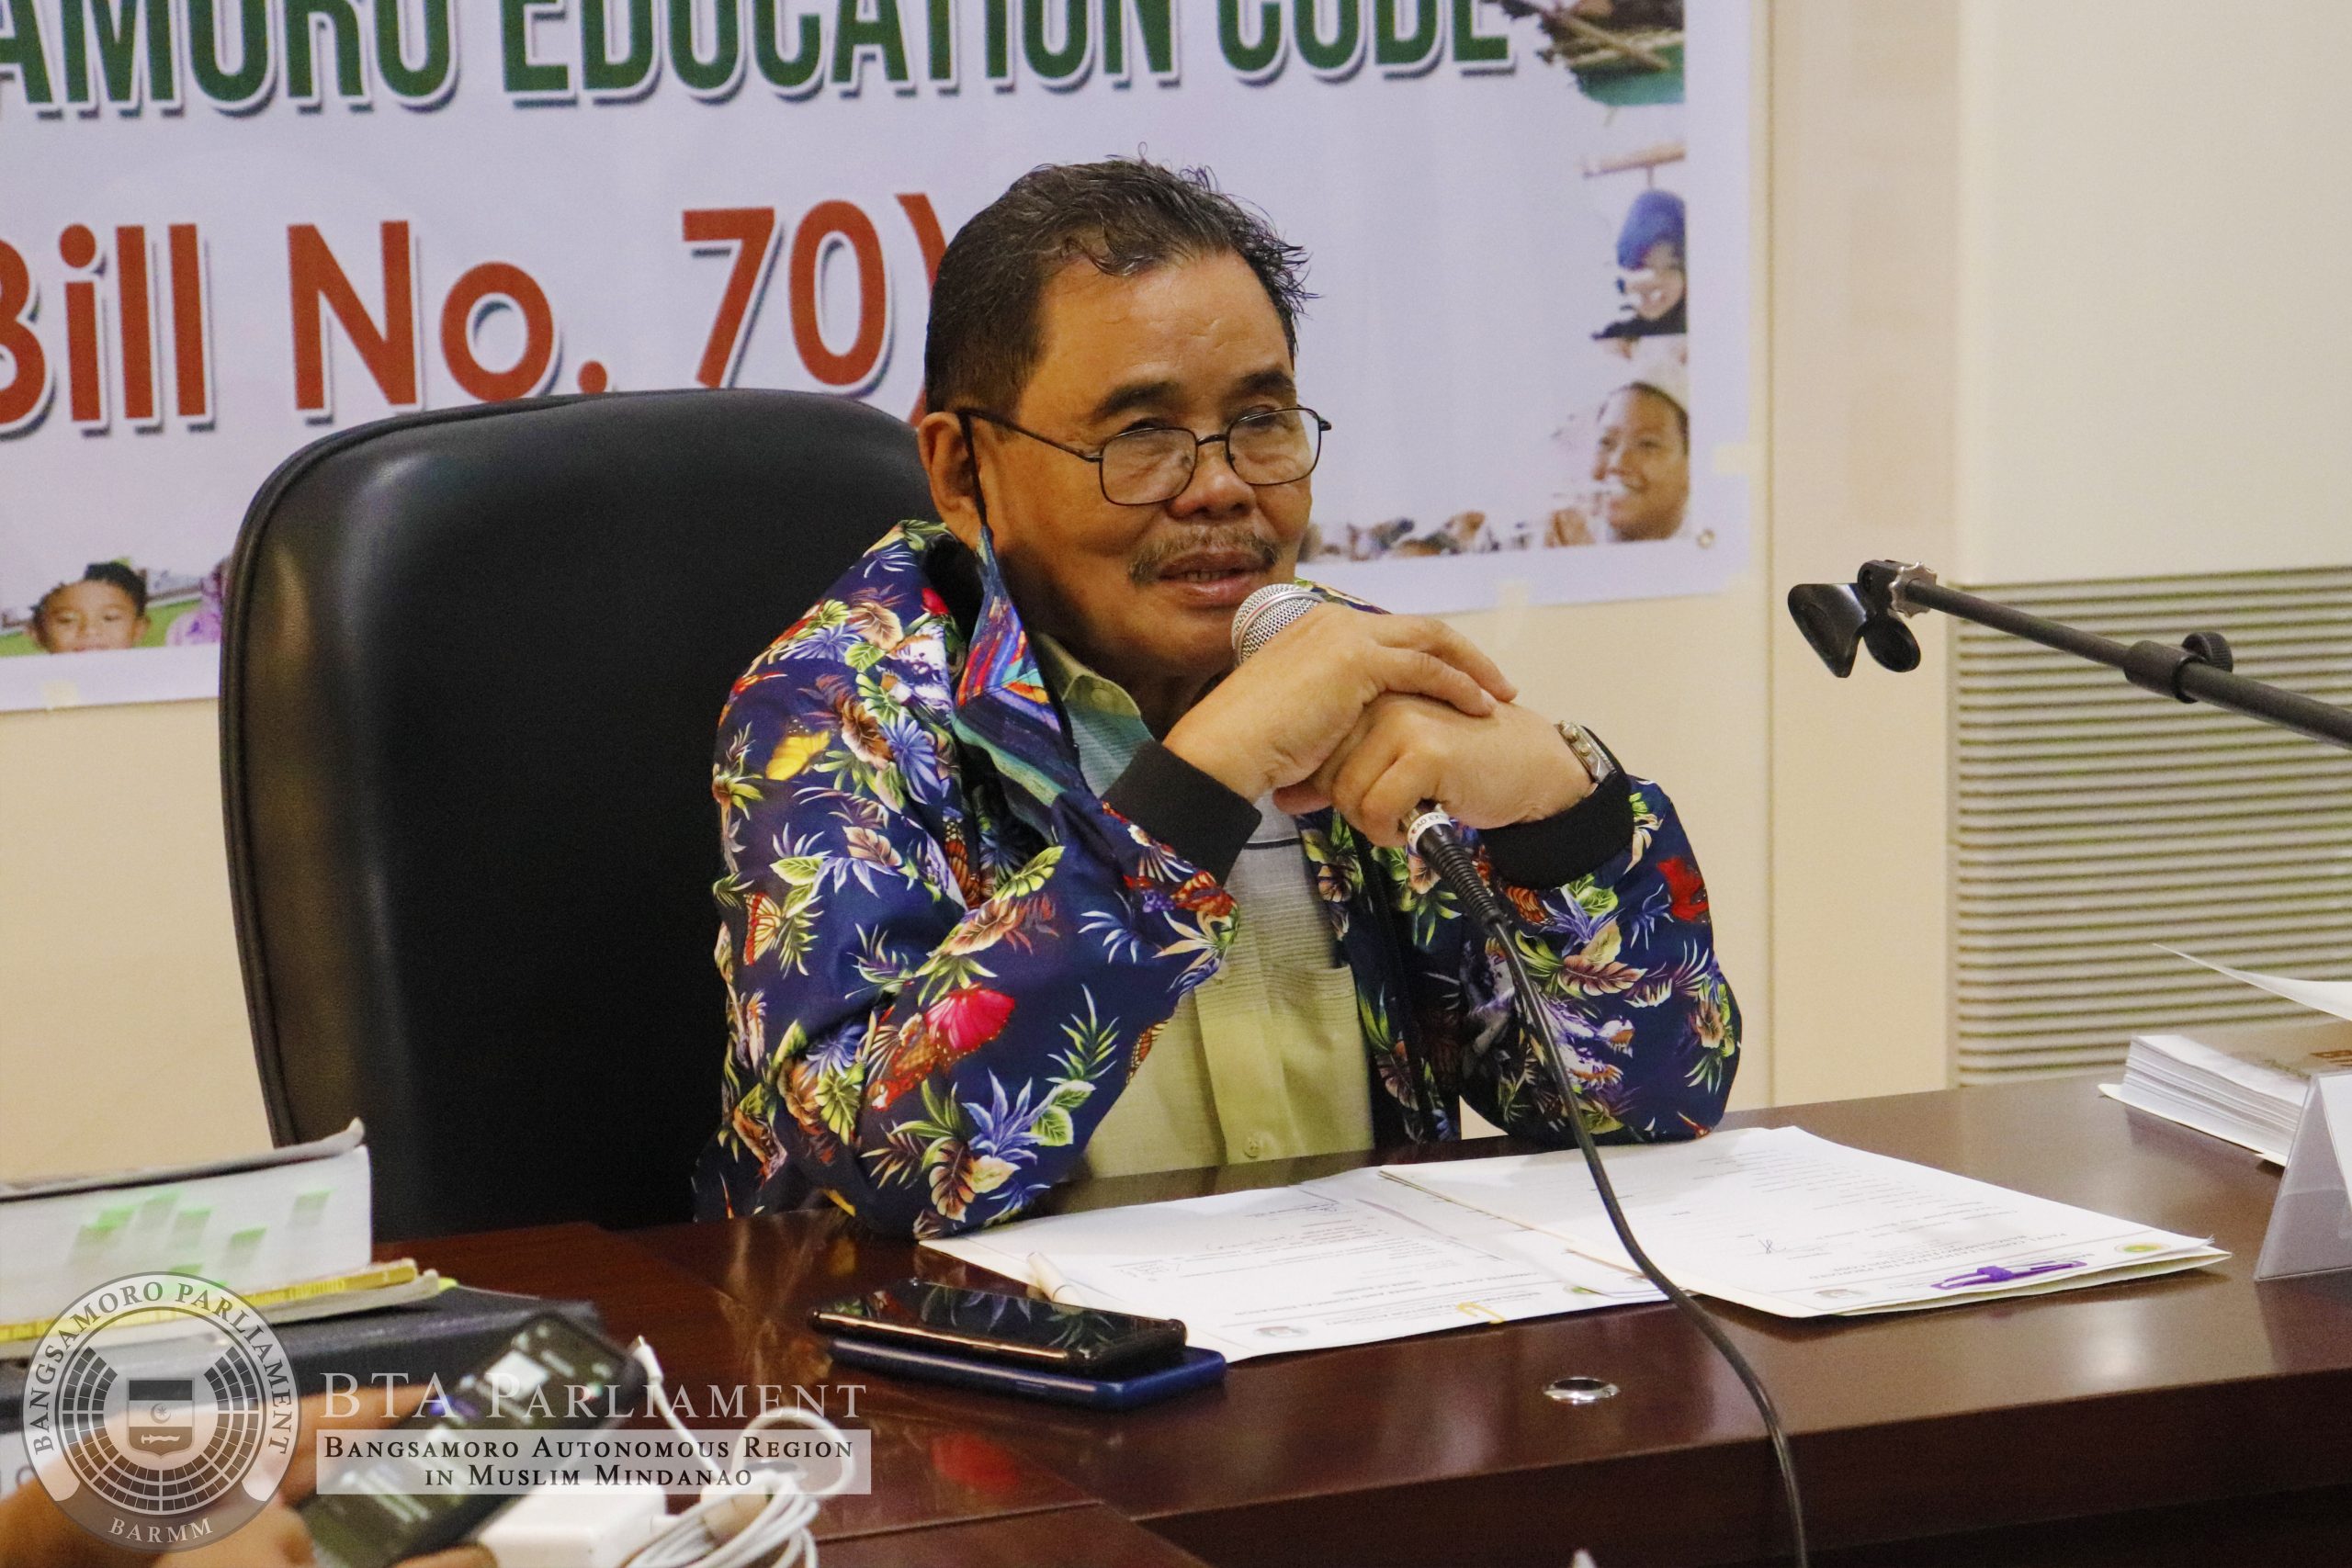 CBHTE receives panel report on Bangsamoro Education Code